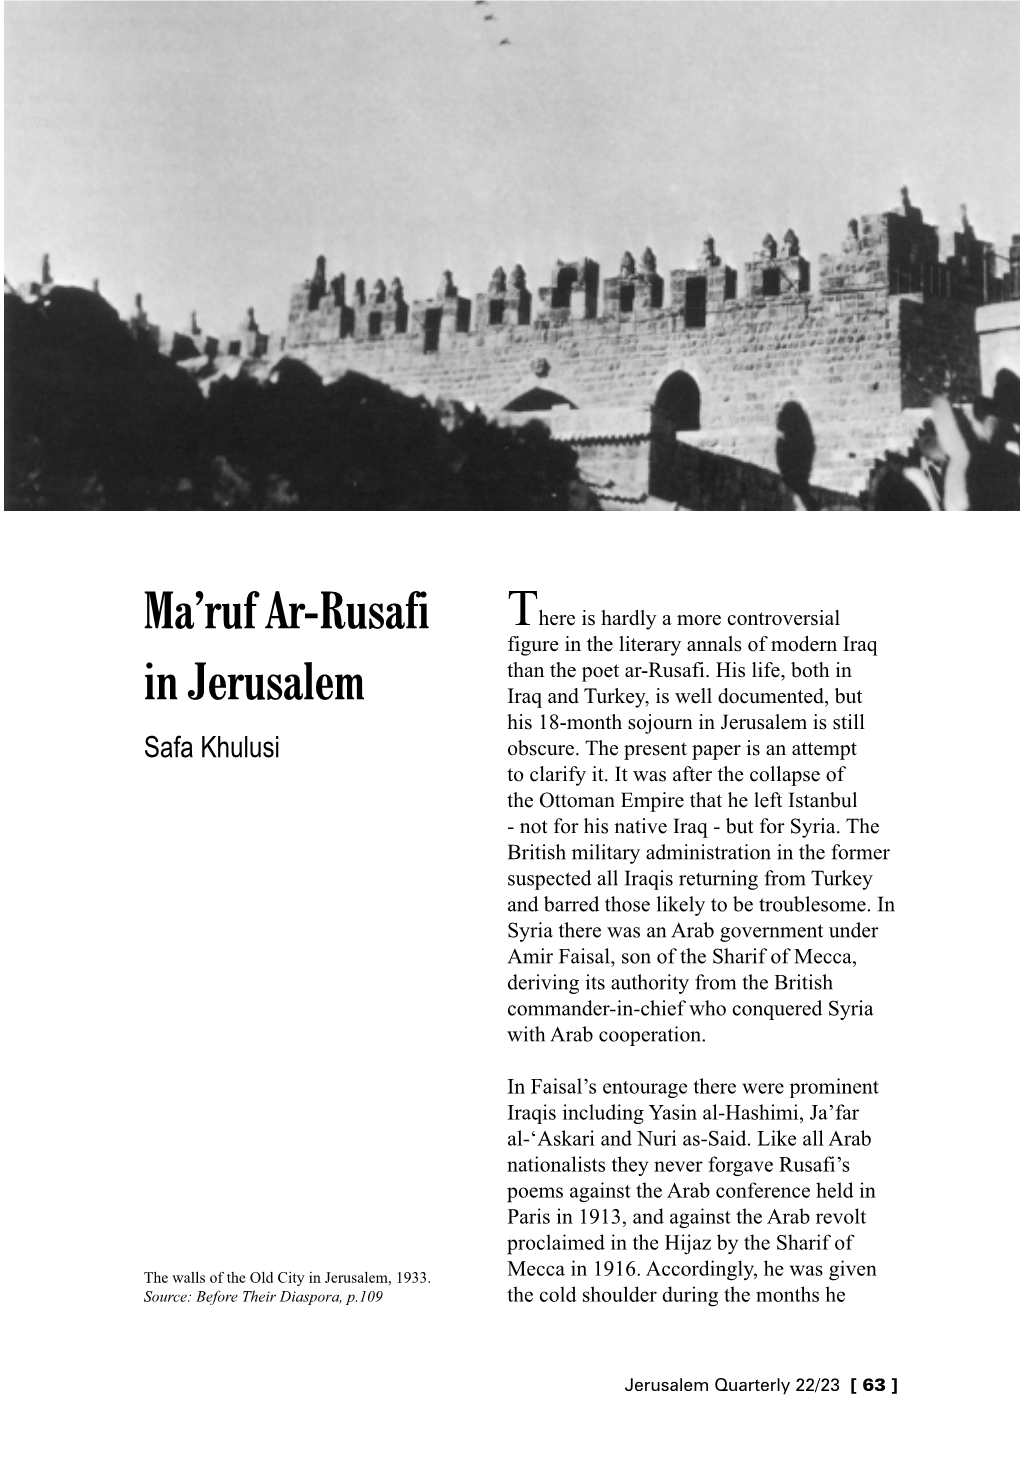 Ma'ruf Ar-Rusafi in Jerusalem